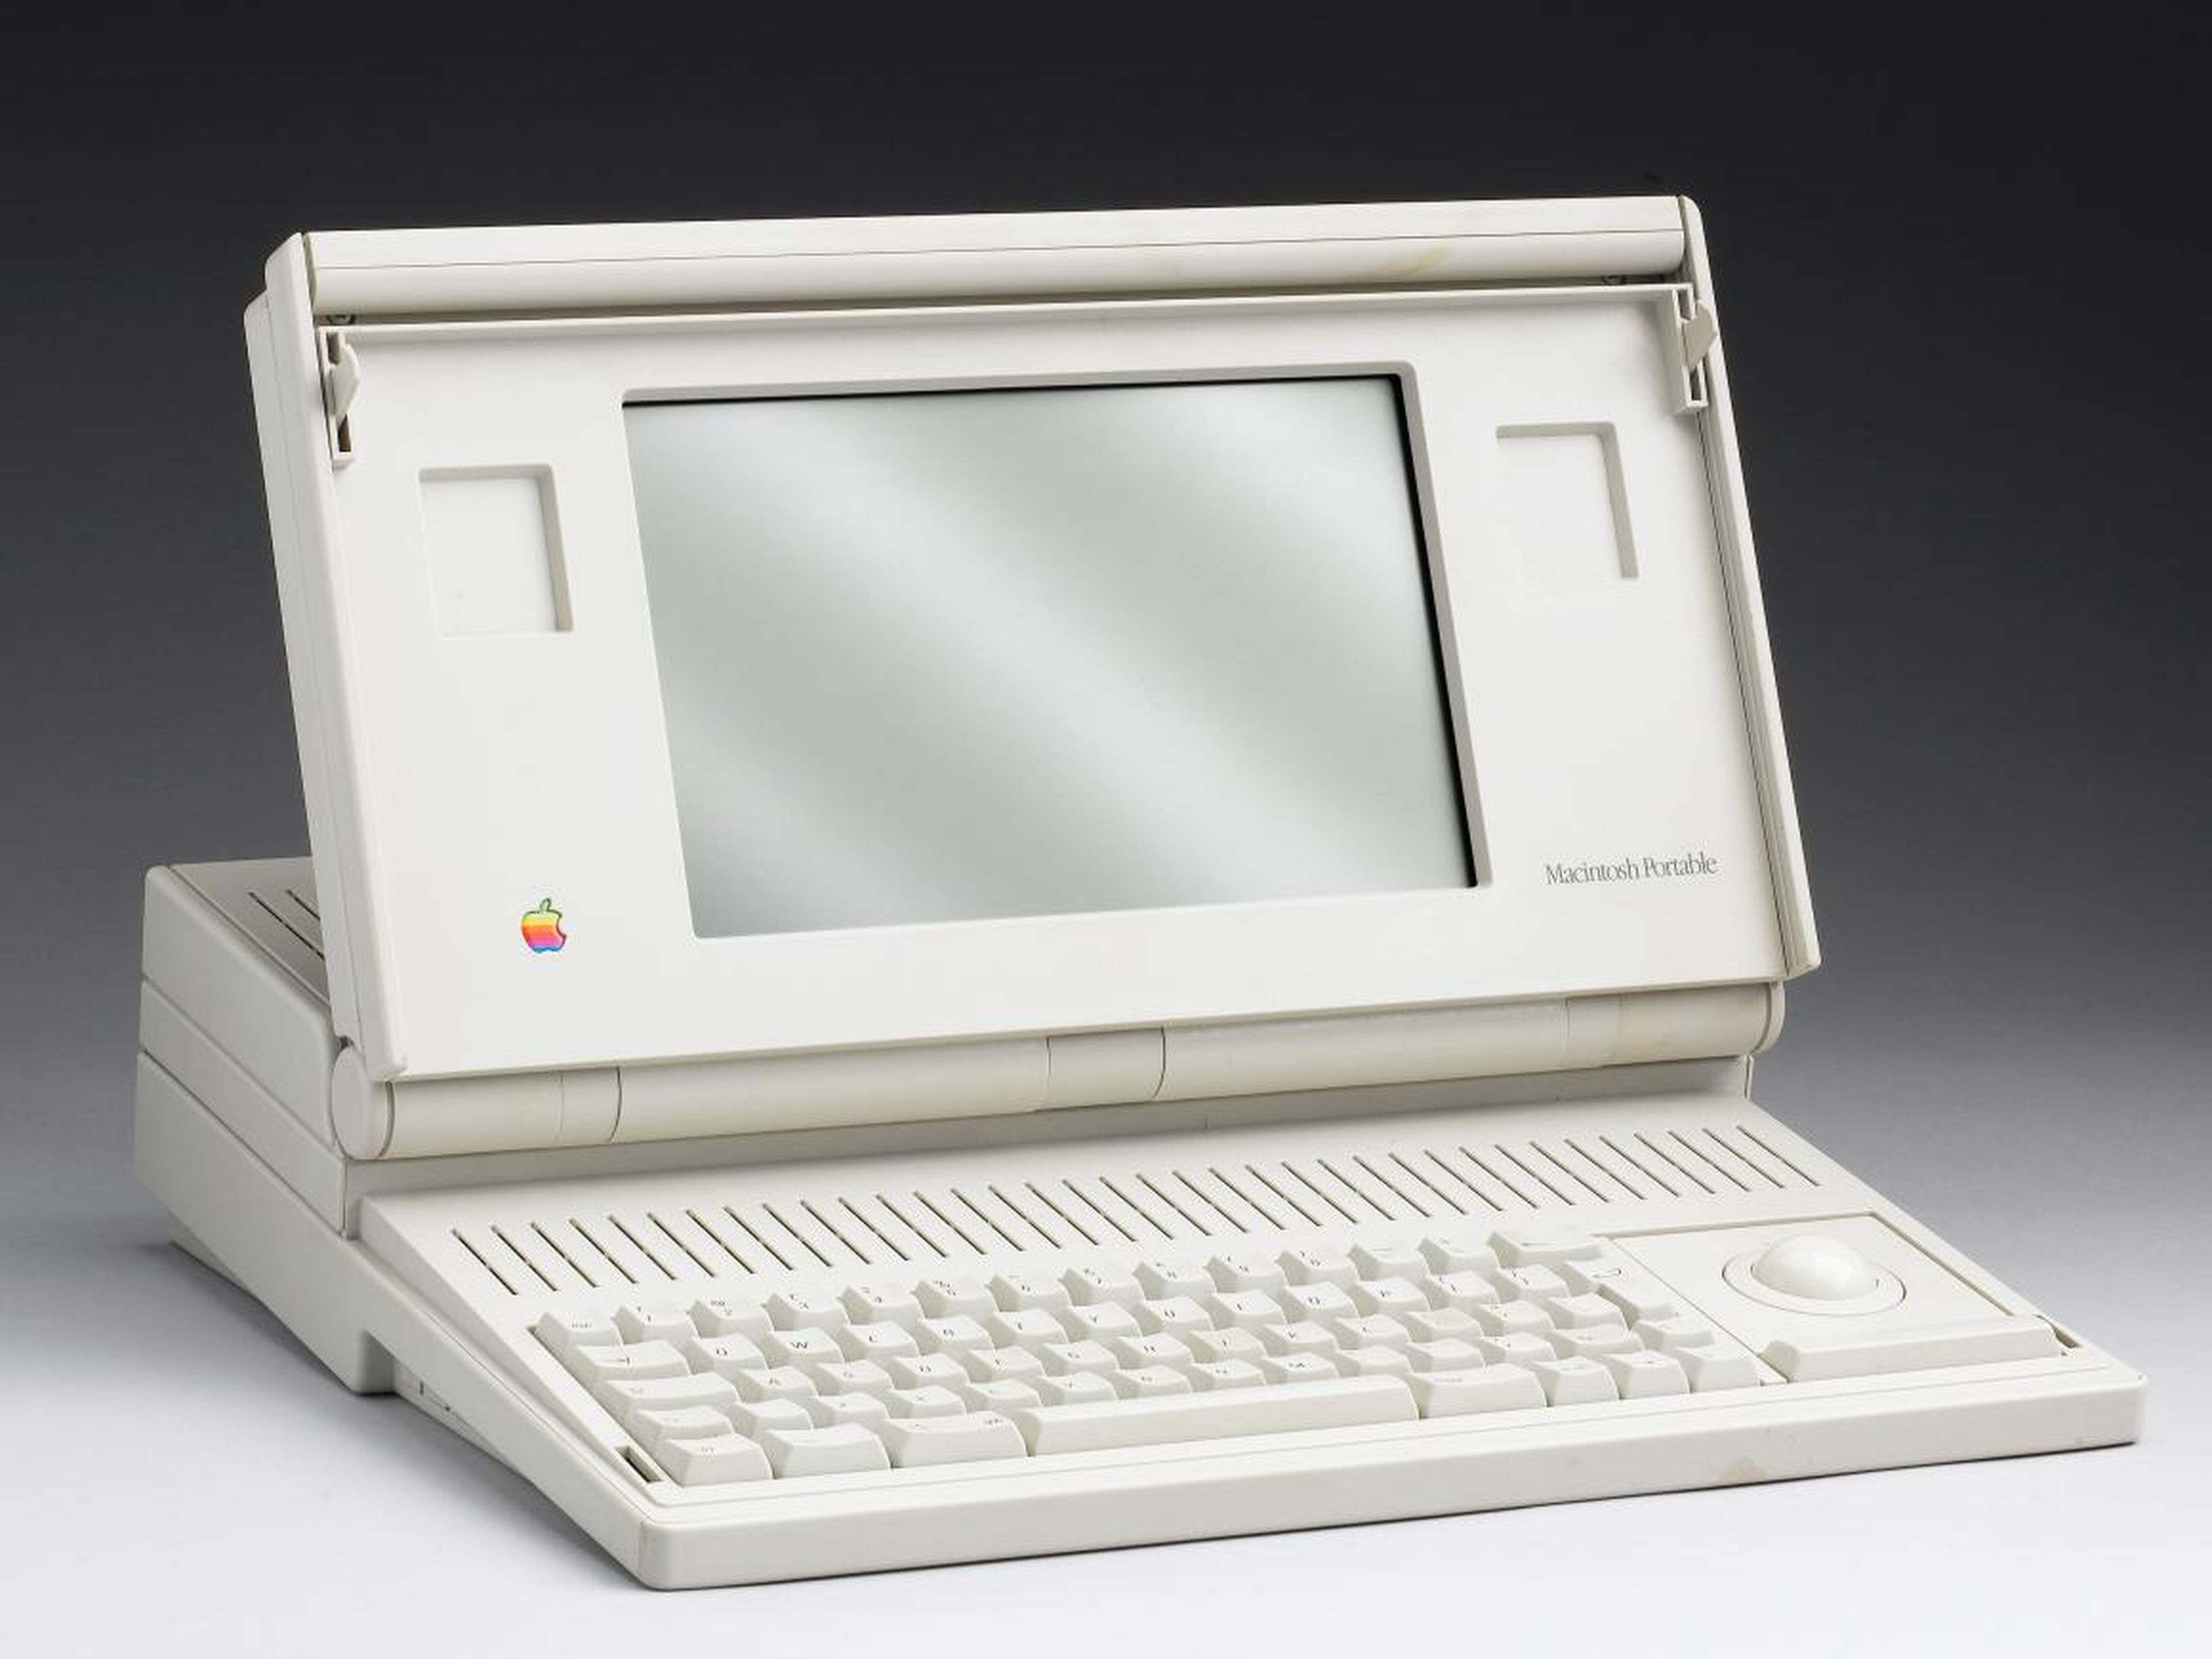 10. Macintosh Portable (1989) — $7,300